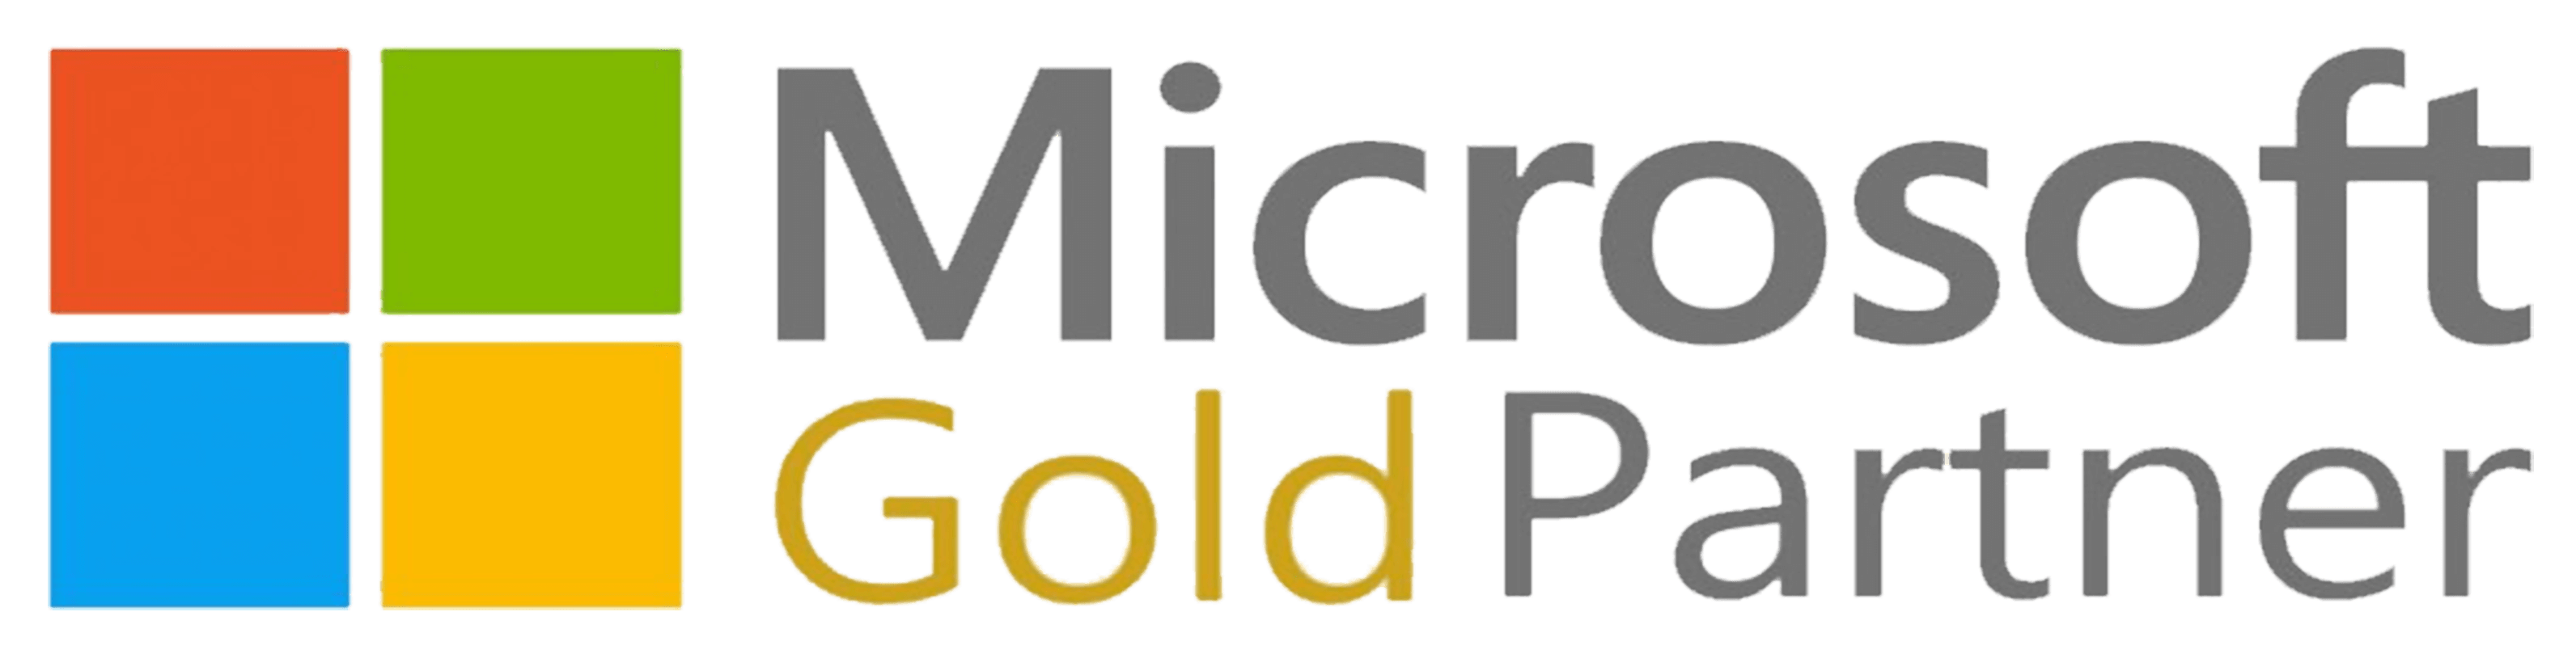 Microsoft Gold Partner.